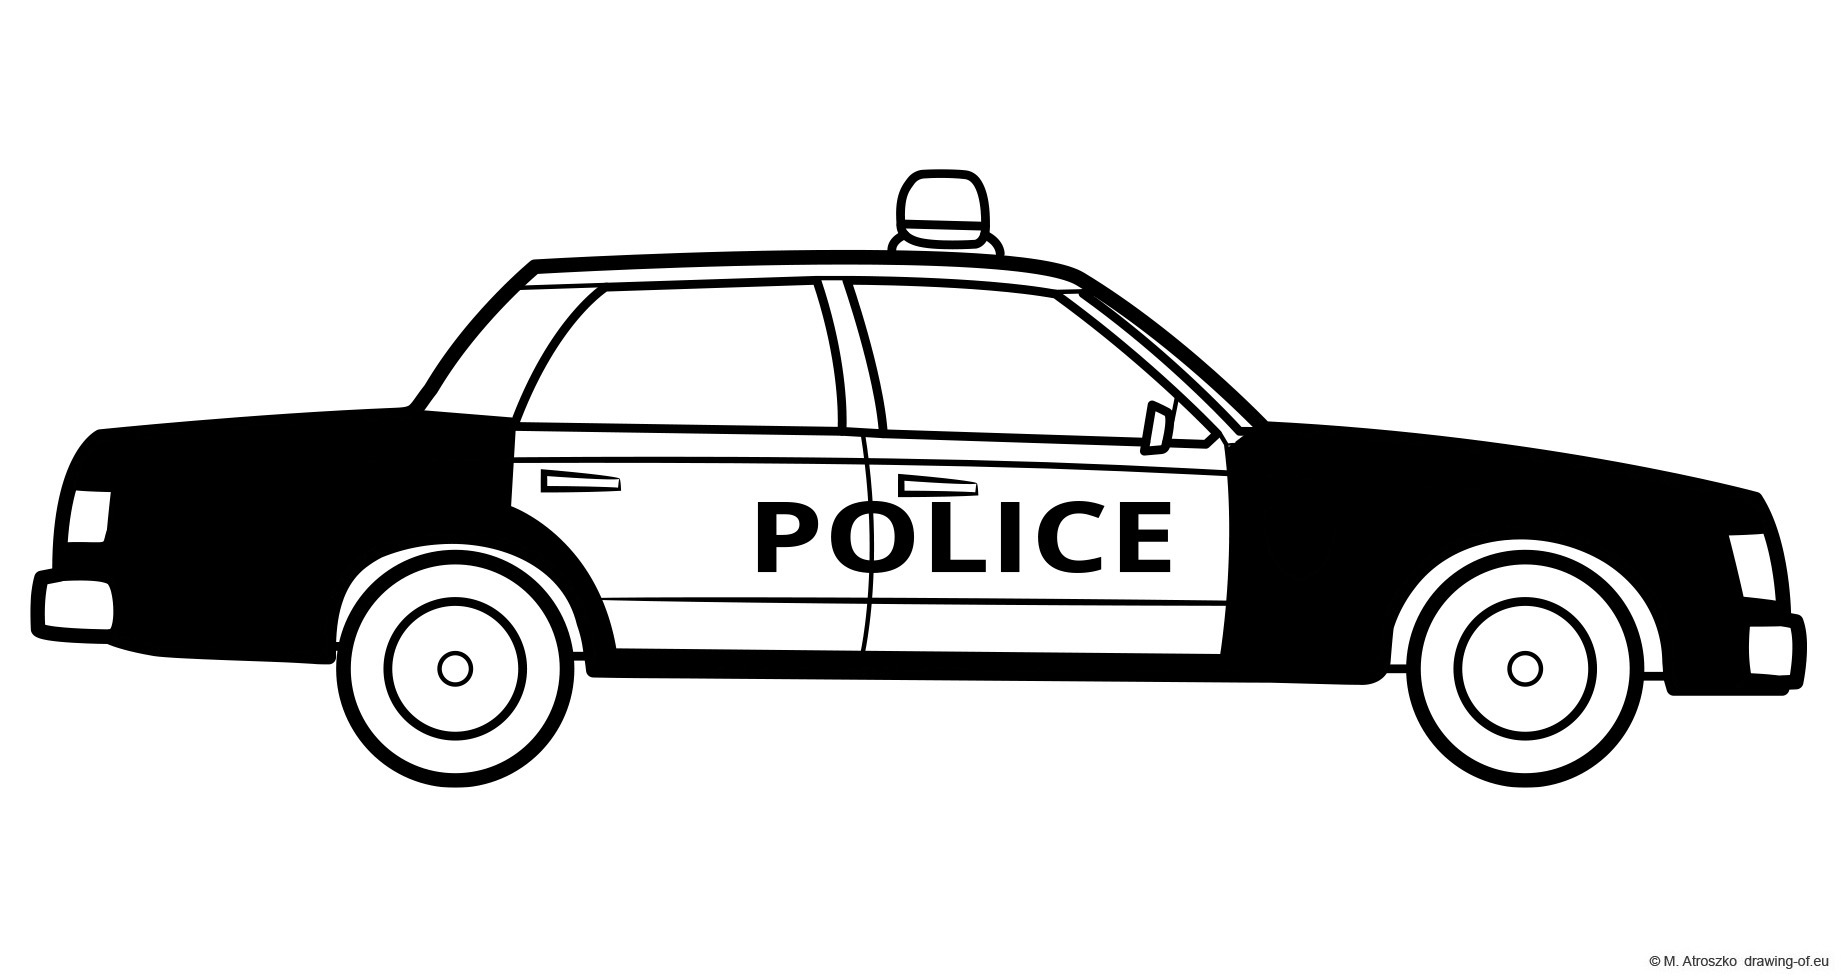 Classic police car illustration